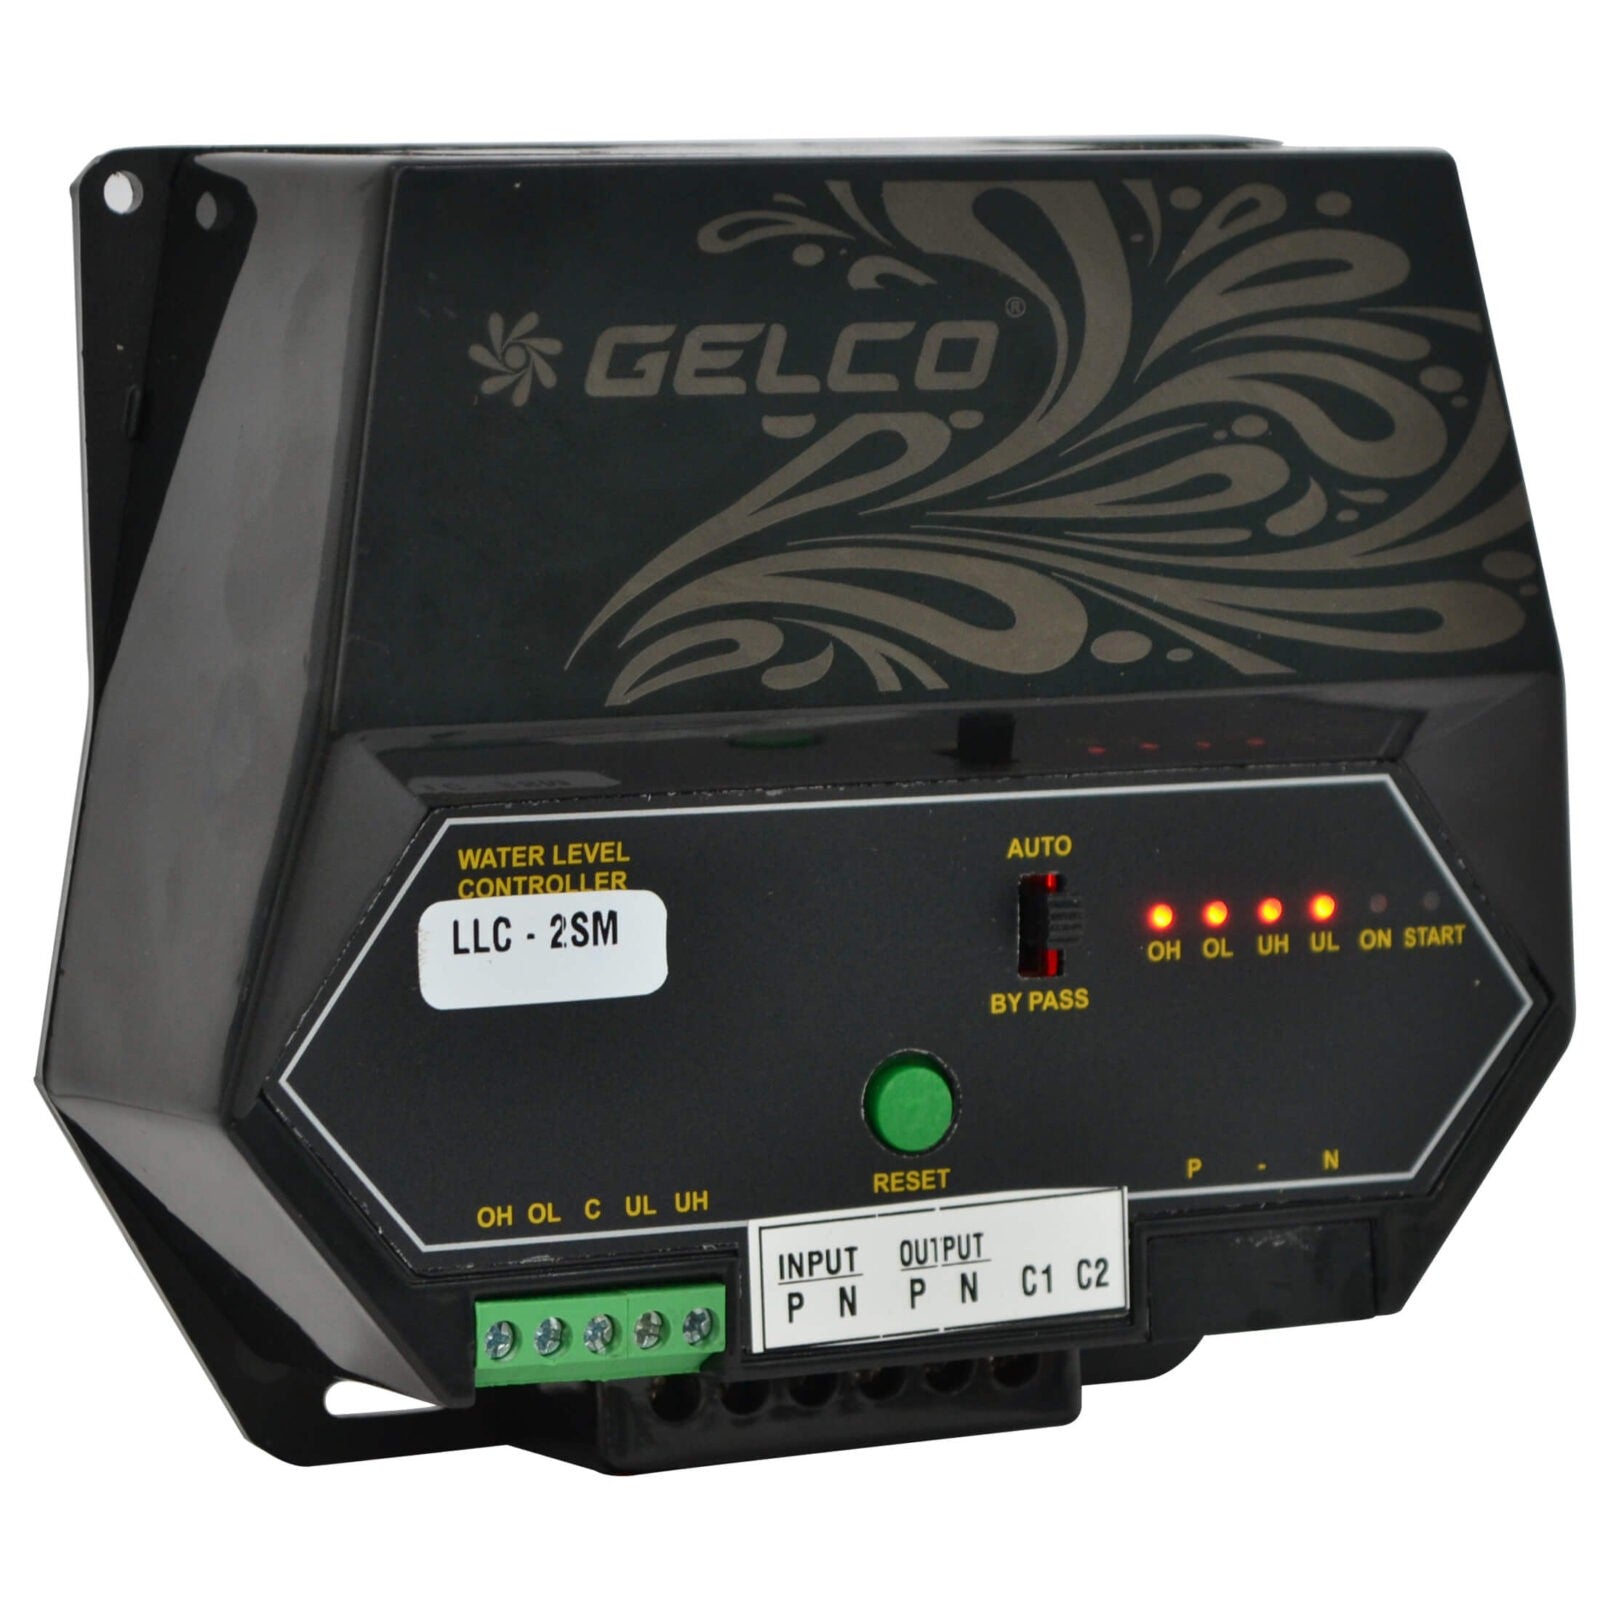 LLC 2 SM, Water Level Controller - Gelco Electronics Pvt. Ltd.